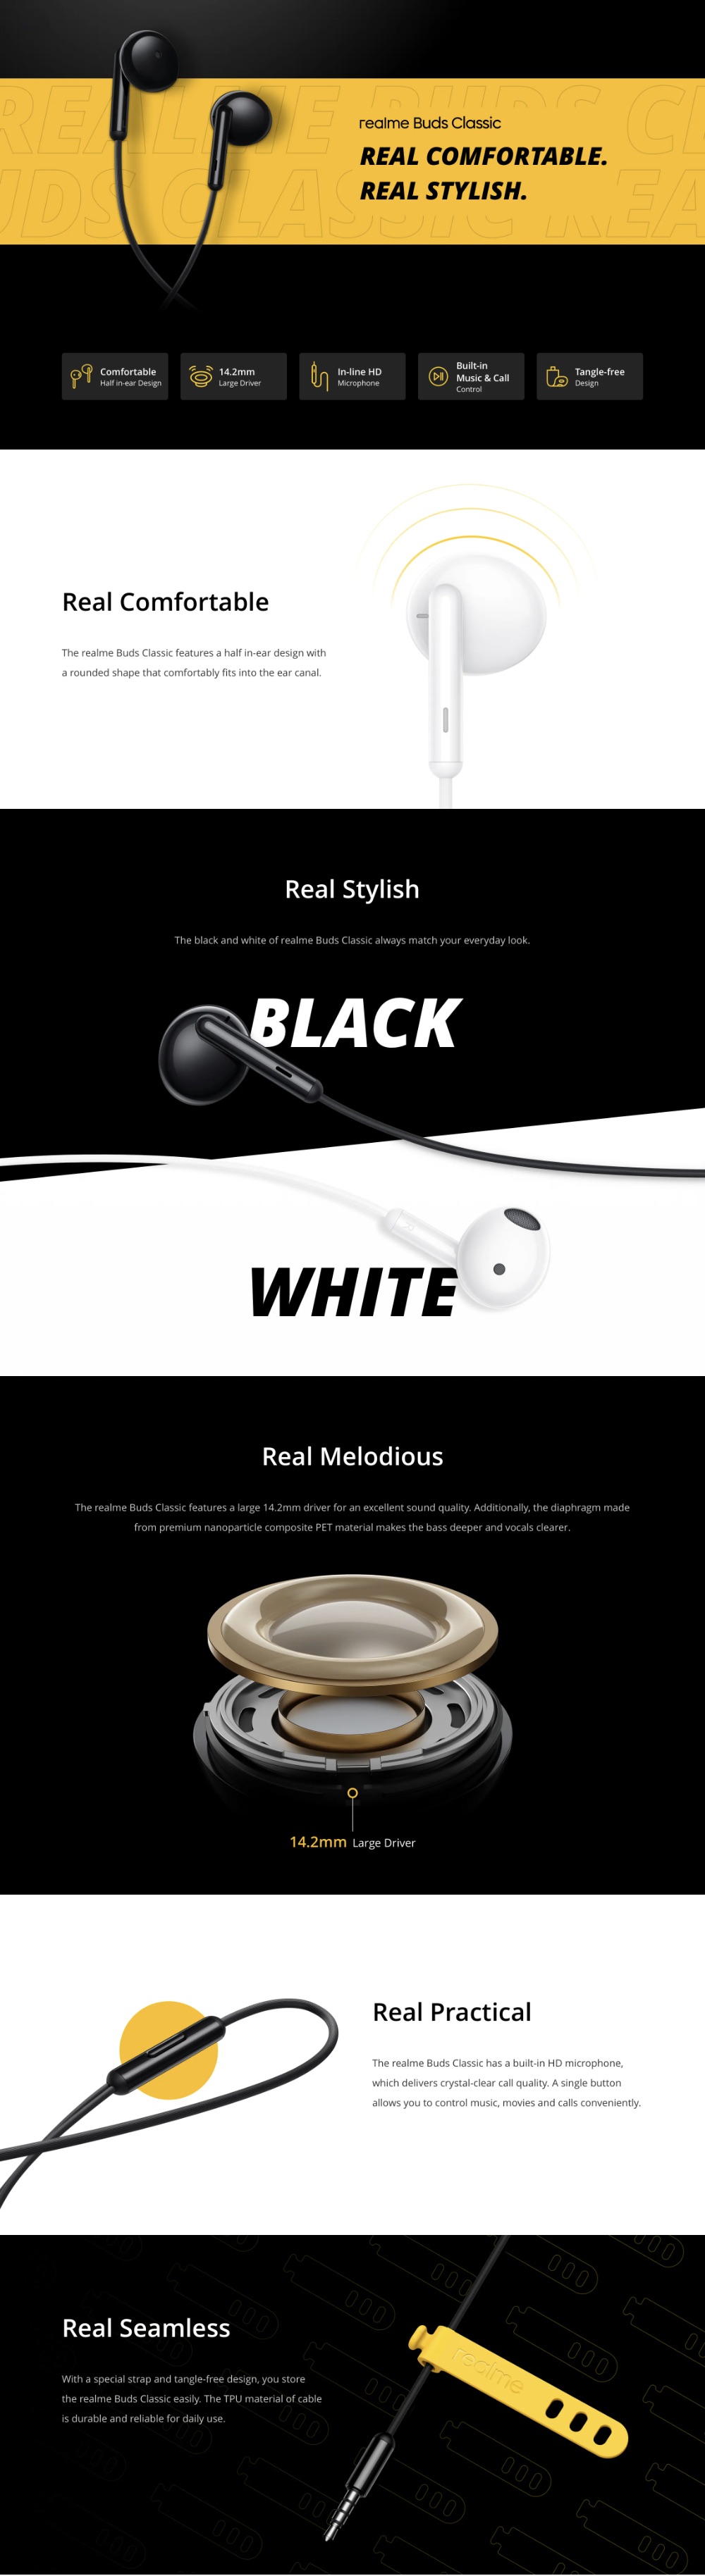 Realme-Buds-Classic-Black-Description-01